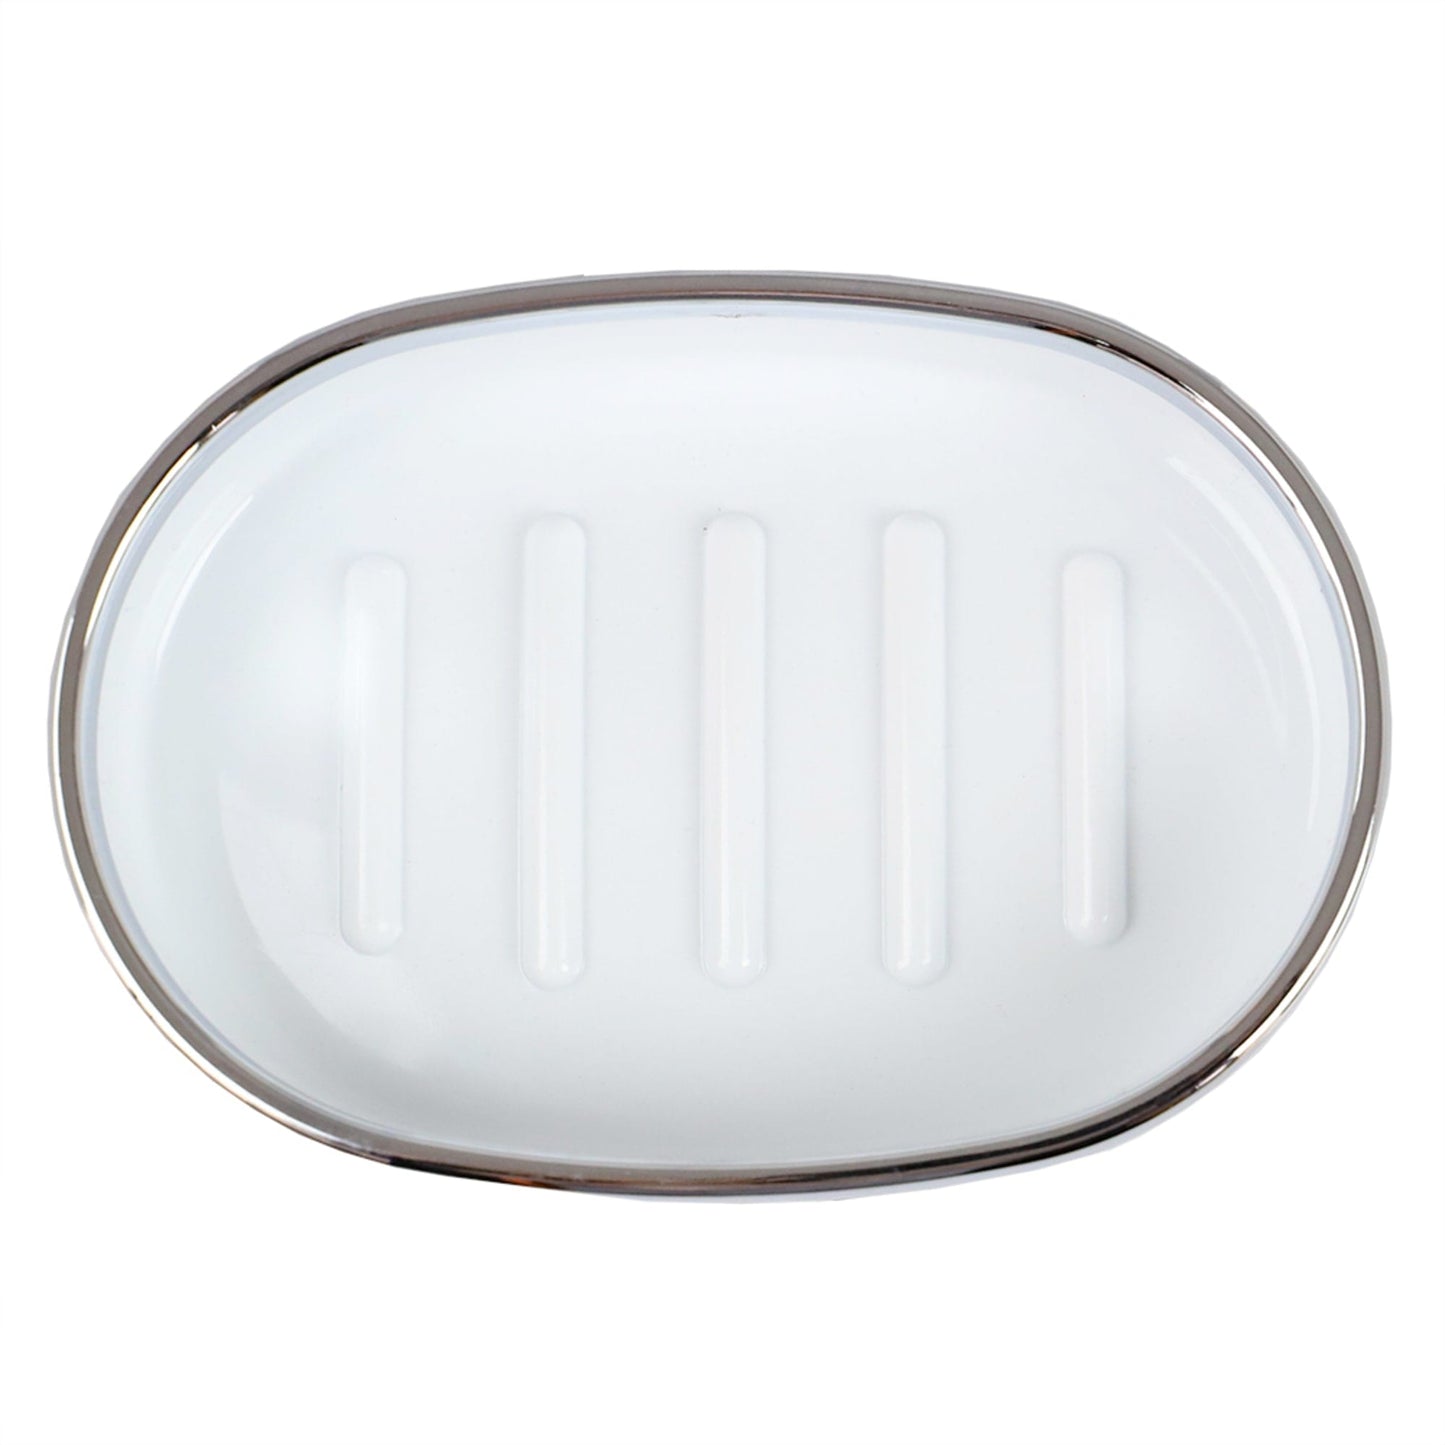 Skylar Oval Ridged ABS Plastic Soap Dish, White